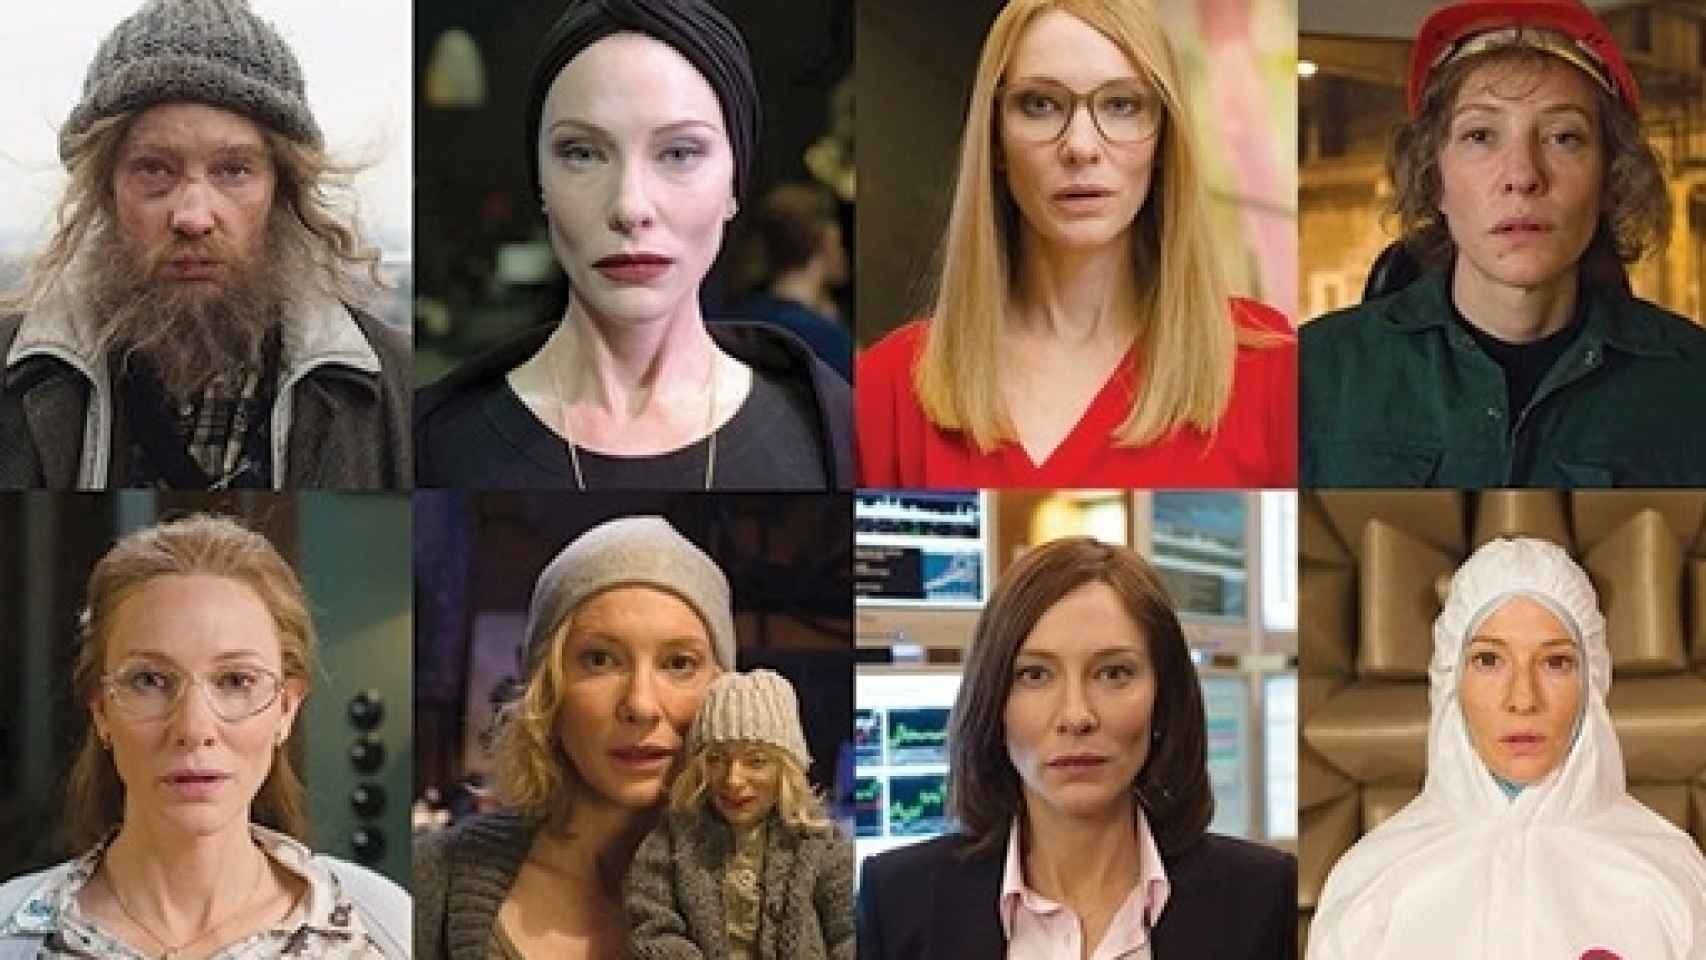 Image: Las 13 caras de Cate Blanchett